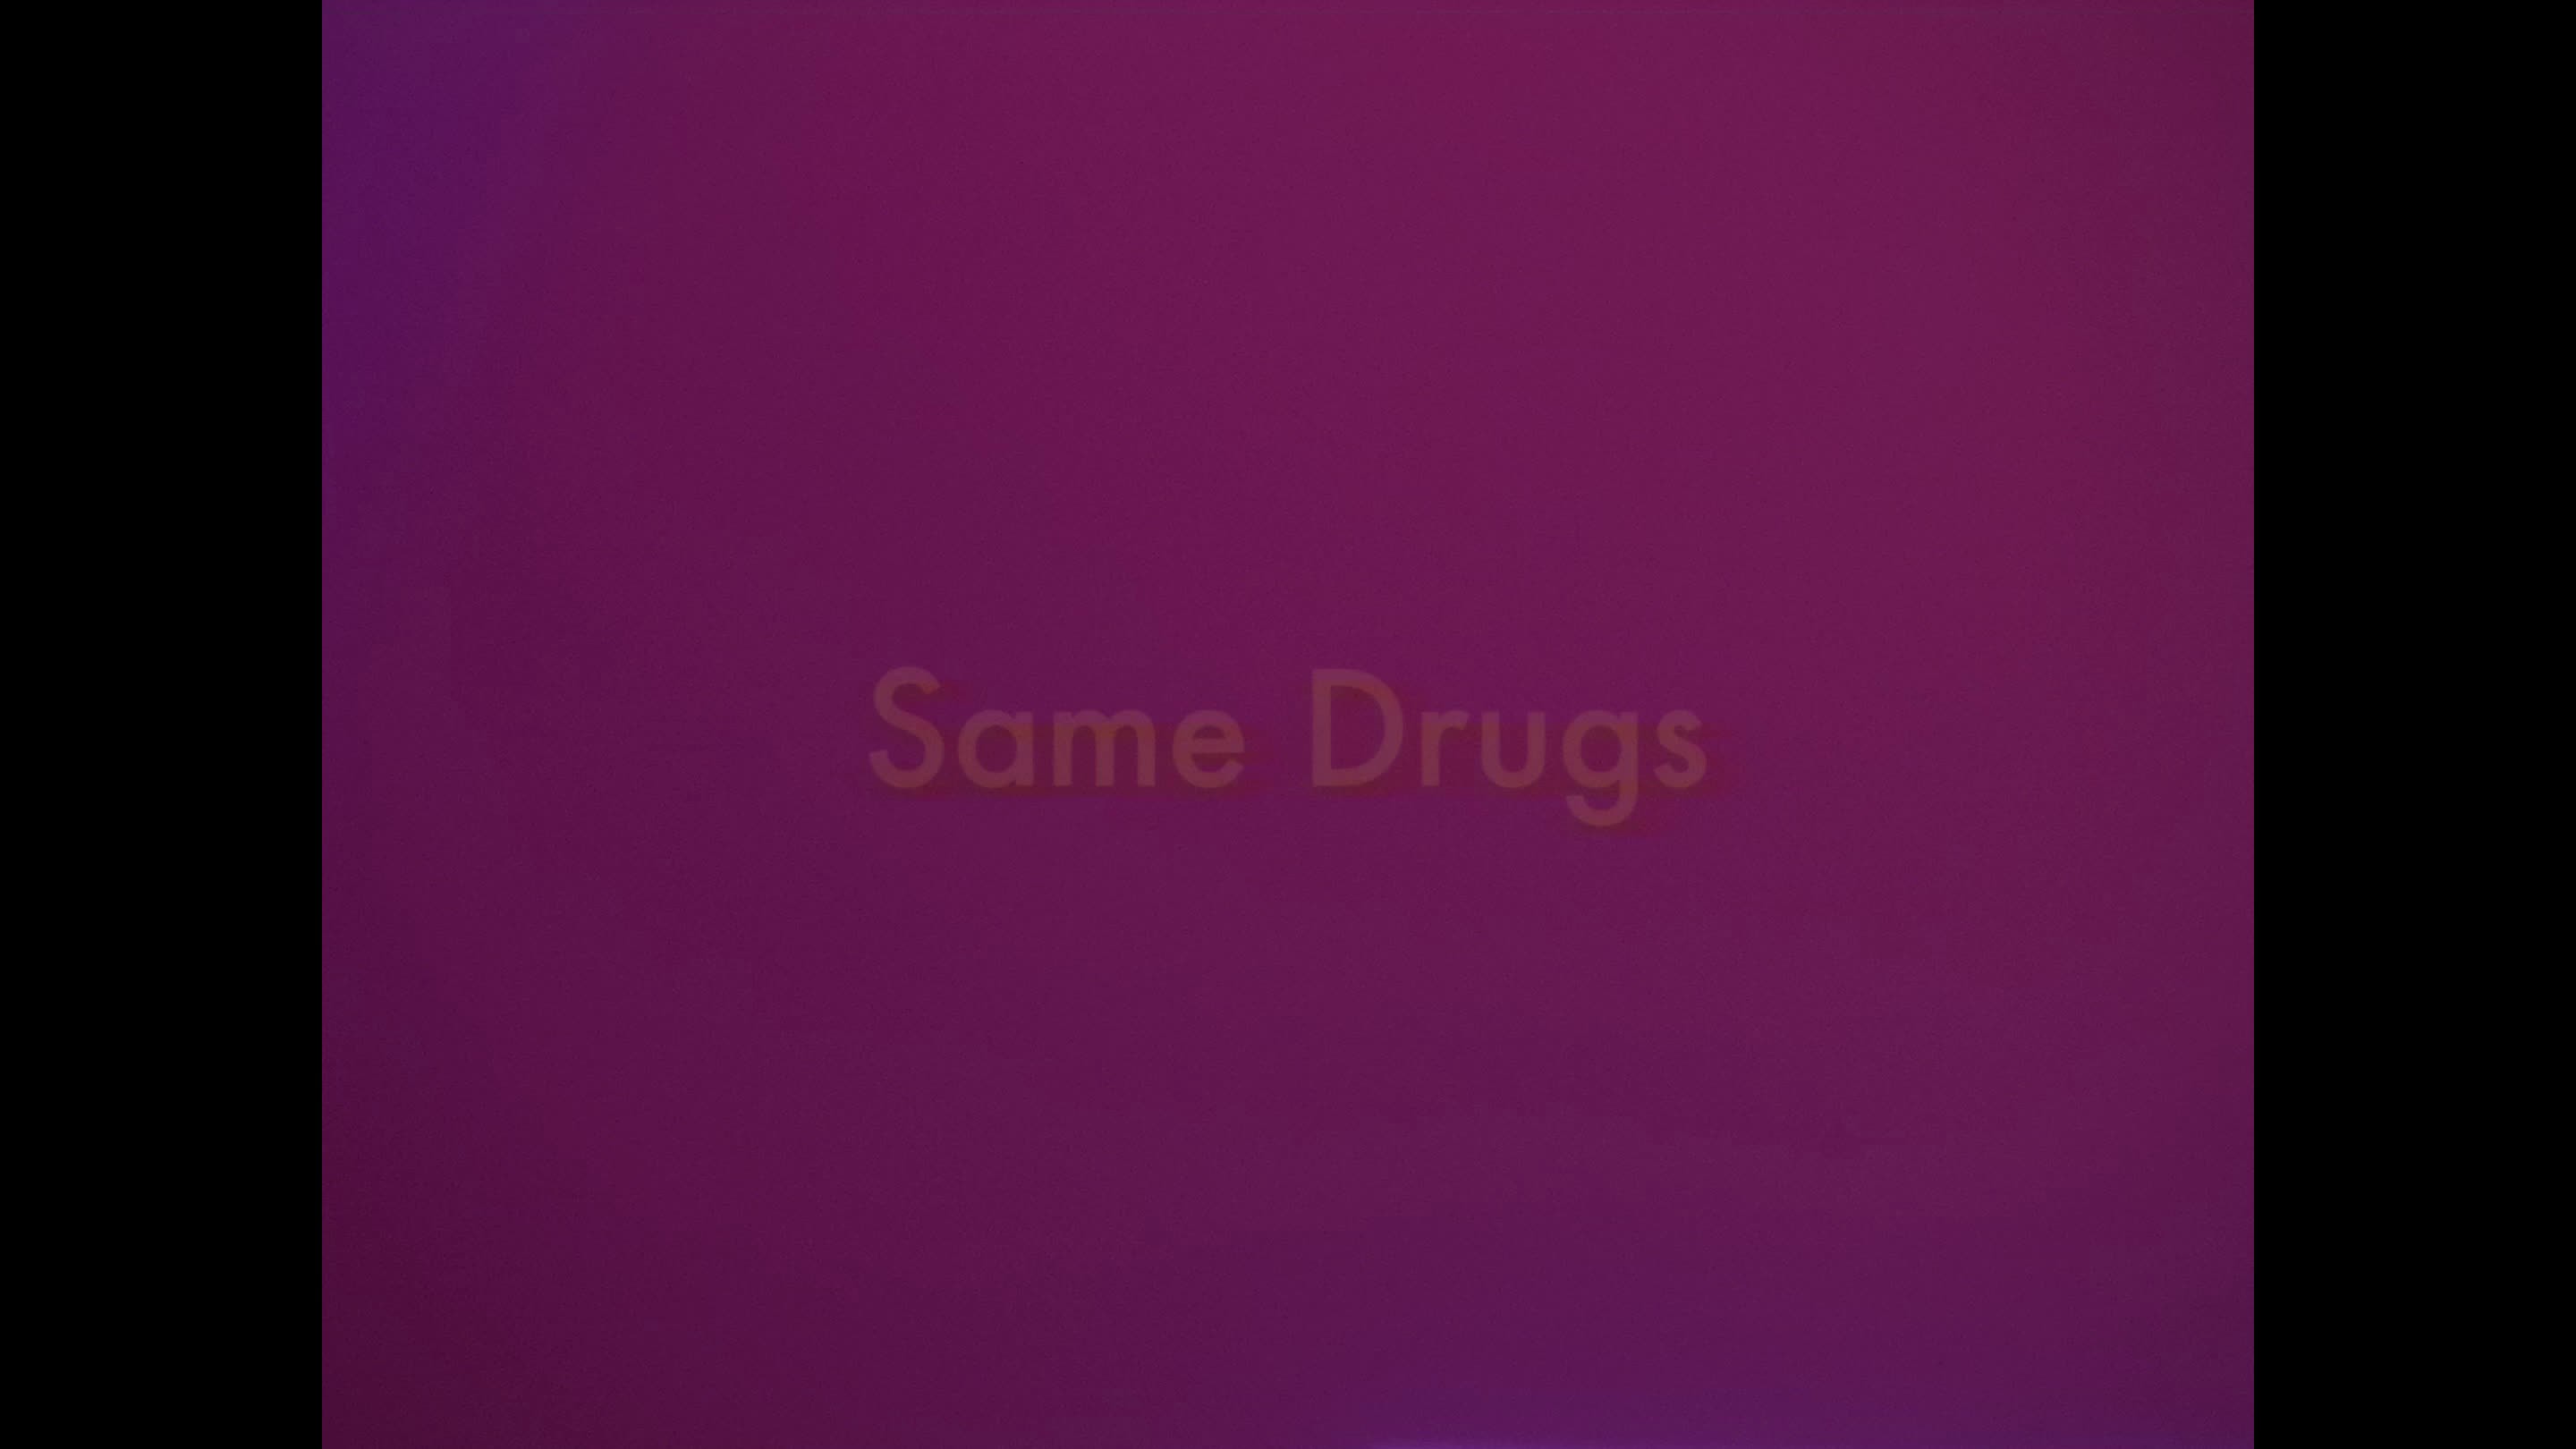 Same Drugs